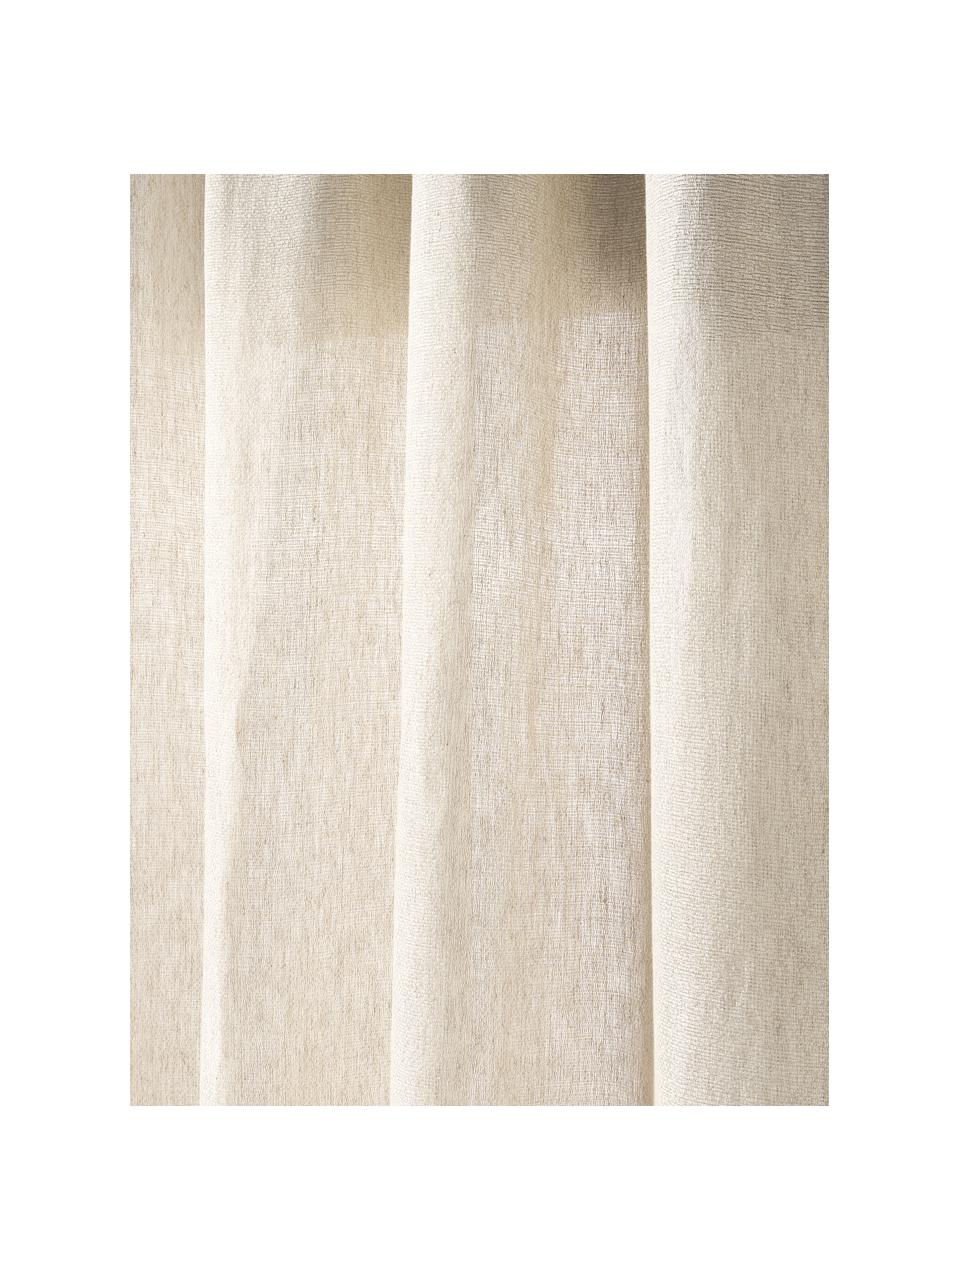 Cortina semitransparente con dobladillo Harmony, 2 uds., 100% lino, Beige claro, Cama 80 cm (135 x 200 cm)